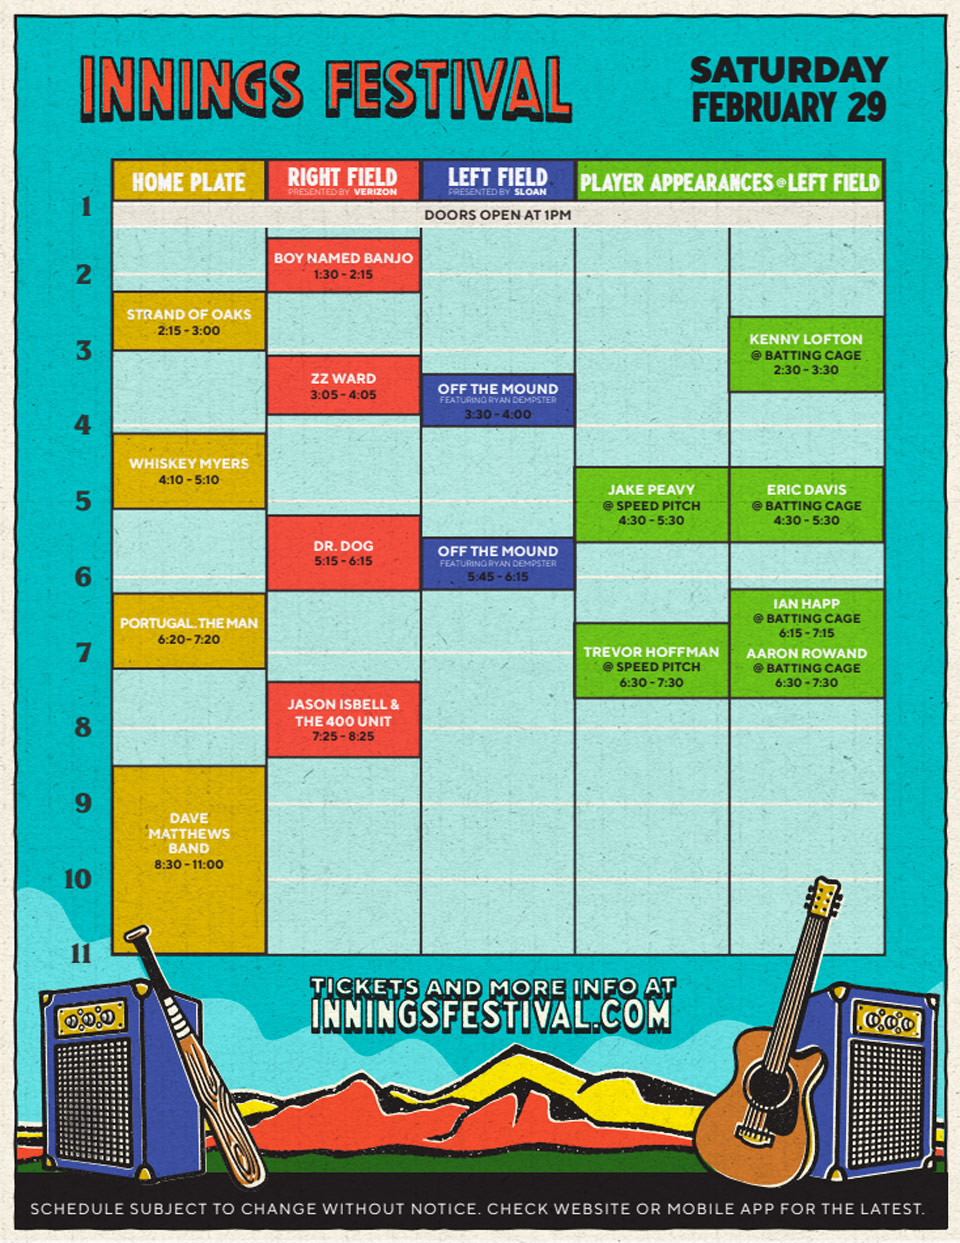 Innings Festival schedule 2020